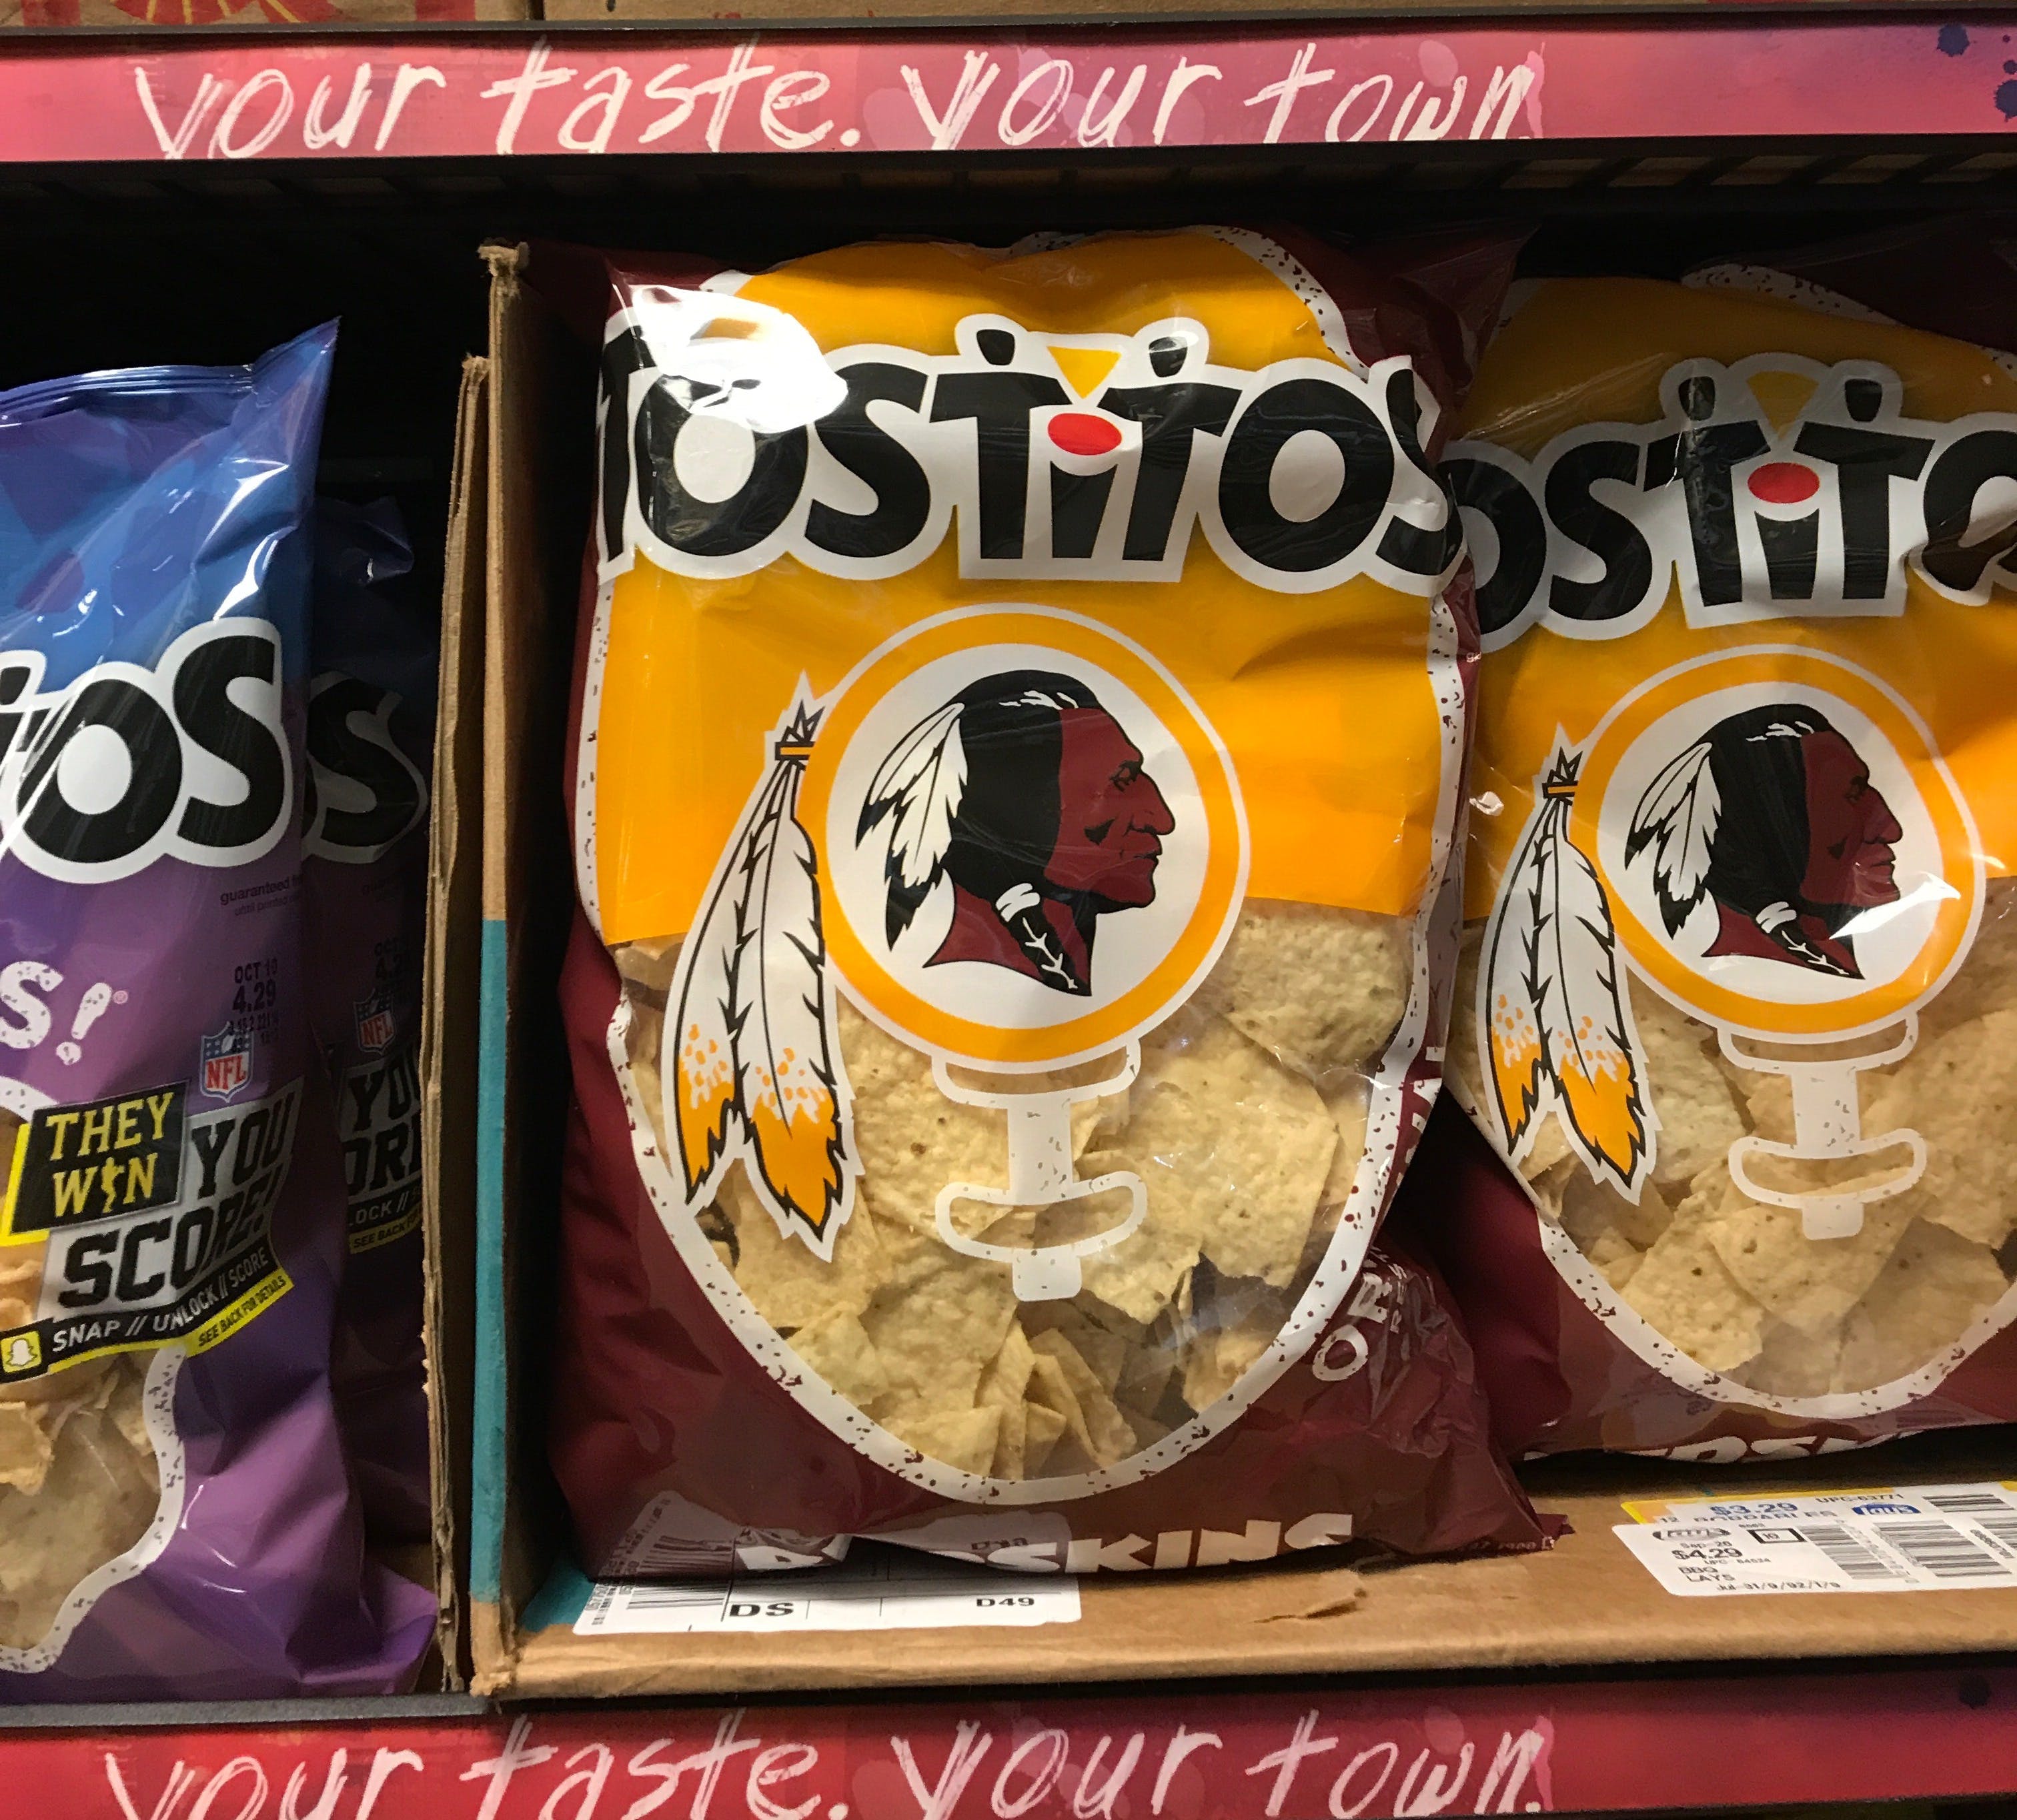 Tostitos Chips Logo - Tostitos Put Washington NFL Team Logo on Bag, Setting Off Debate on ...